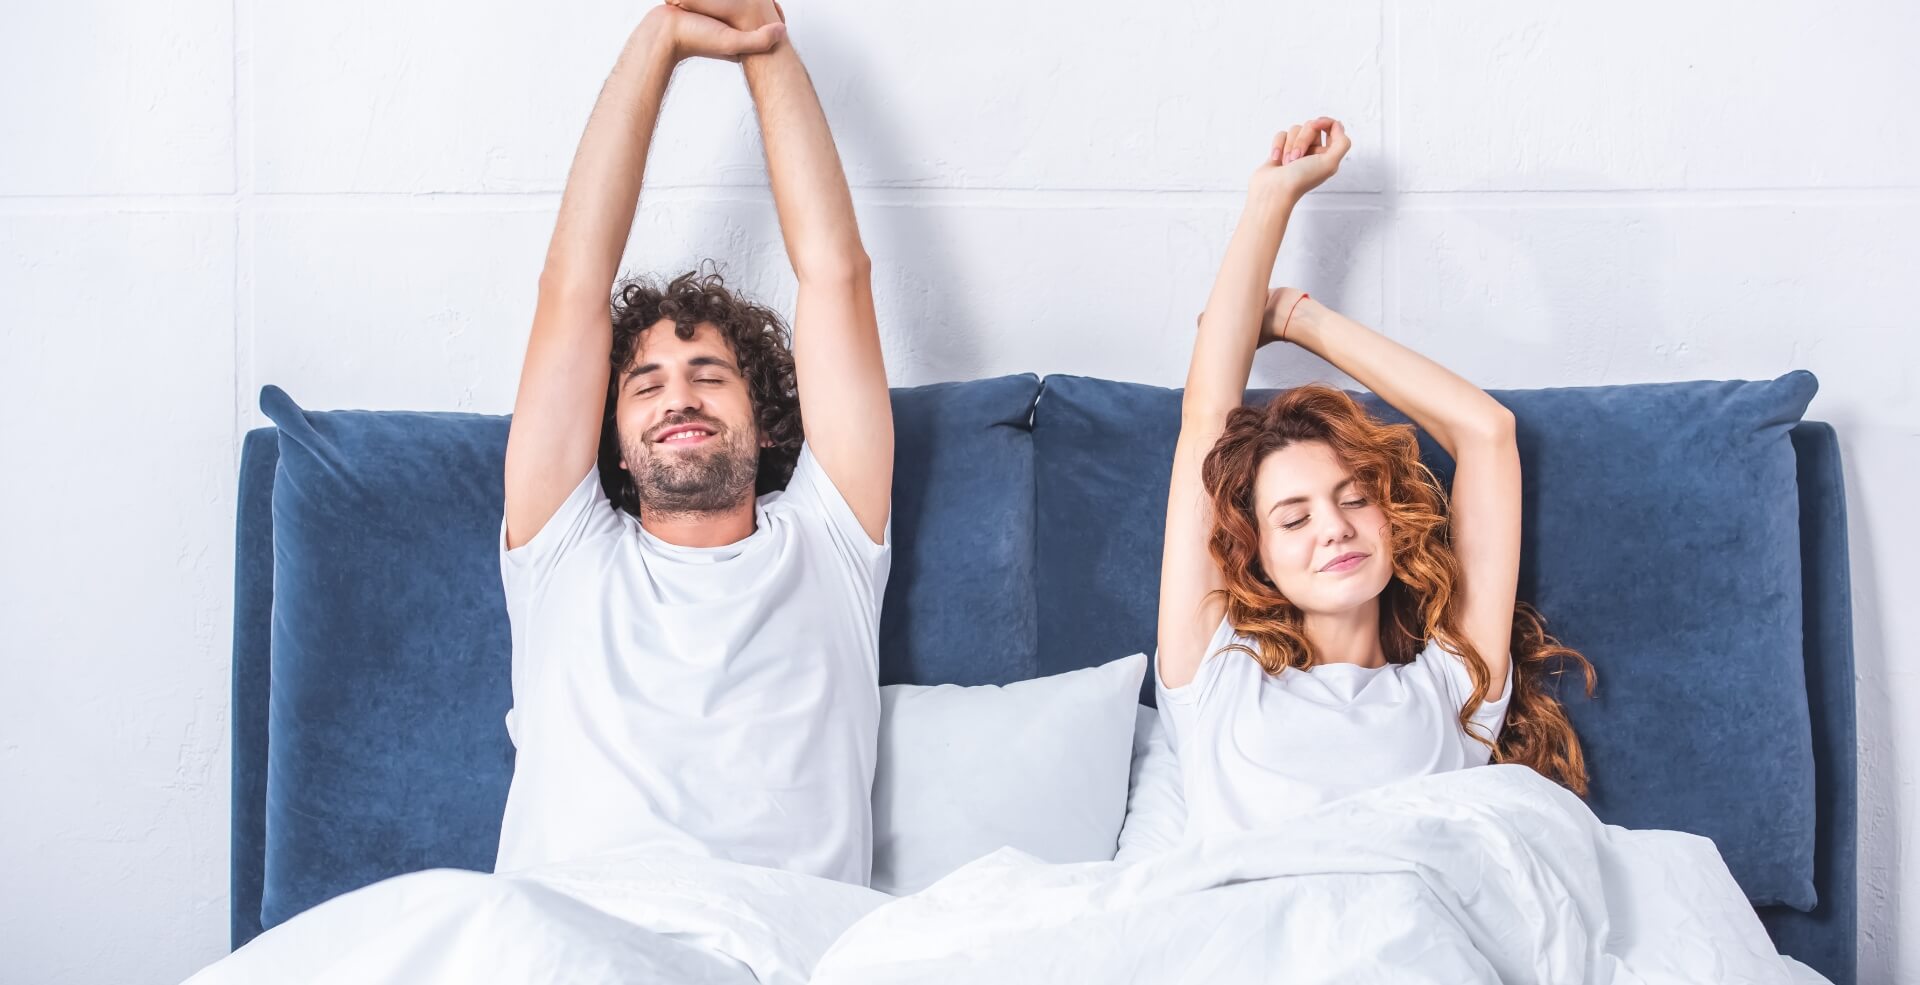 Sleep wellness starts with Ergomotion mobile